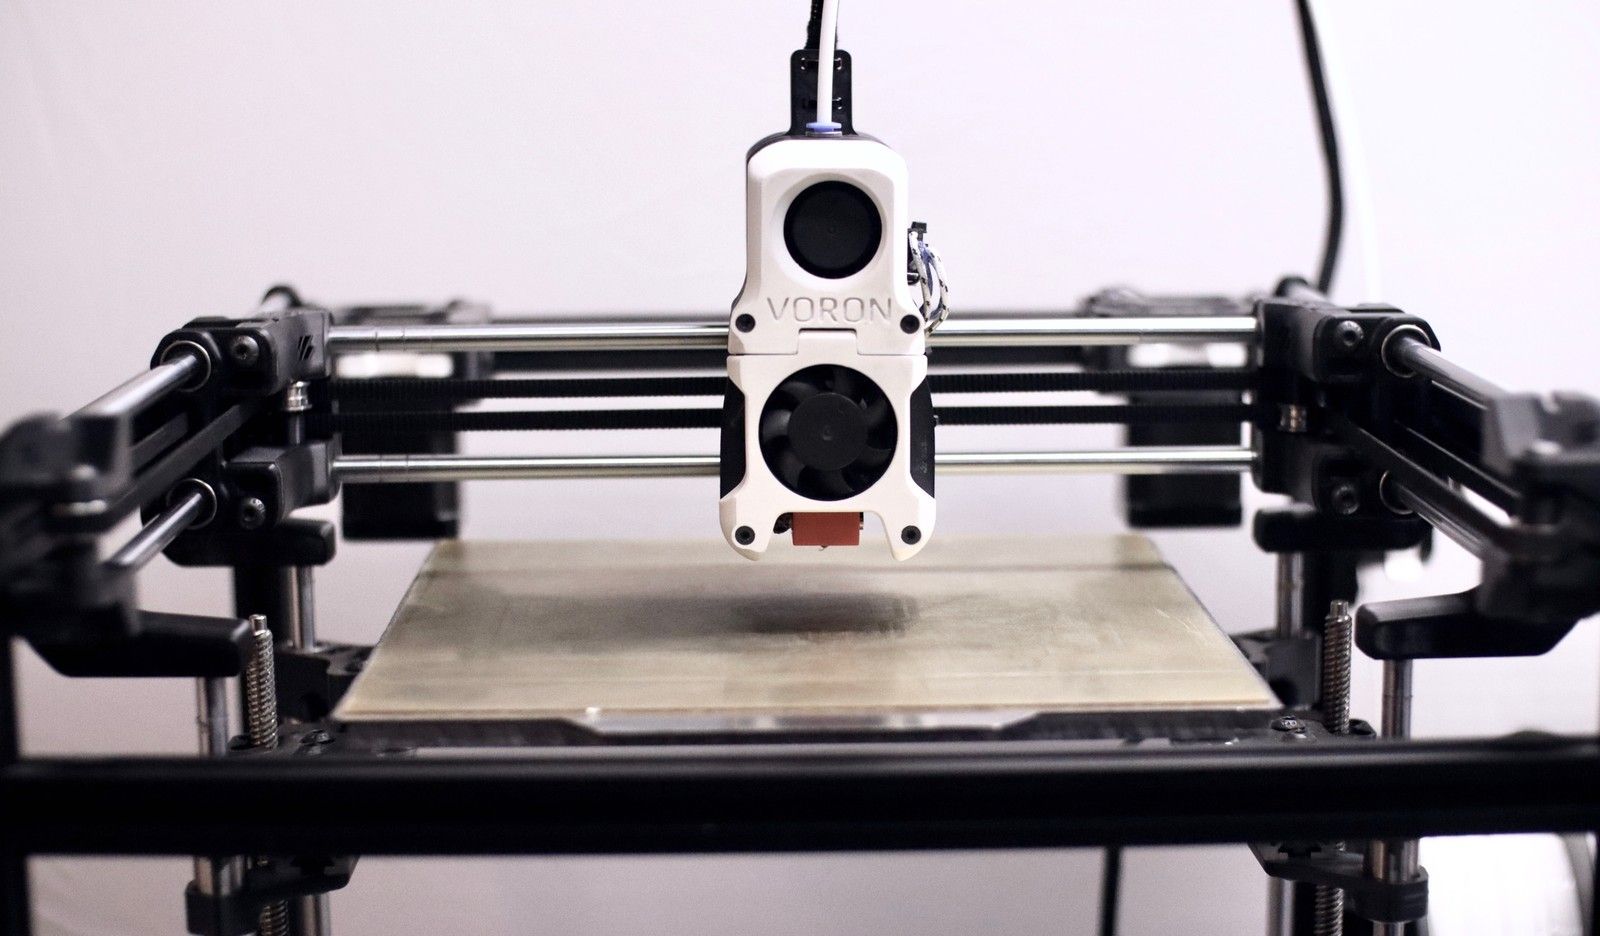 voron legacy 3d printer - Una guida per principianti alle stampanti 3D Voron fai da te: qualità di produzione per le masse